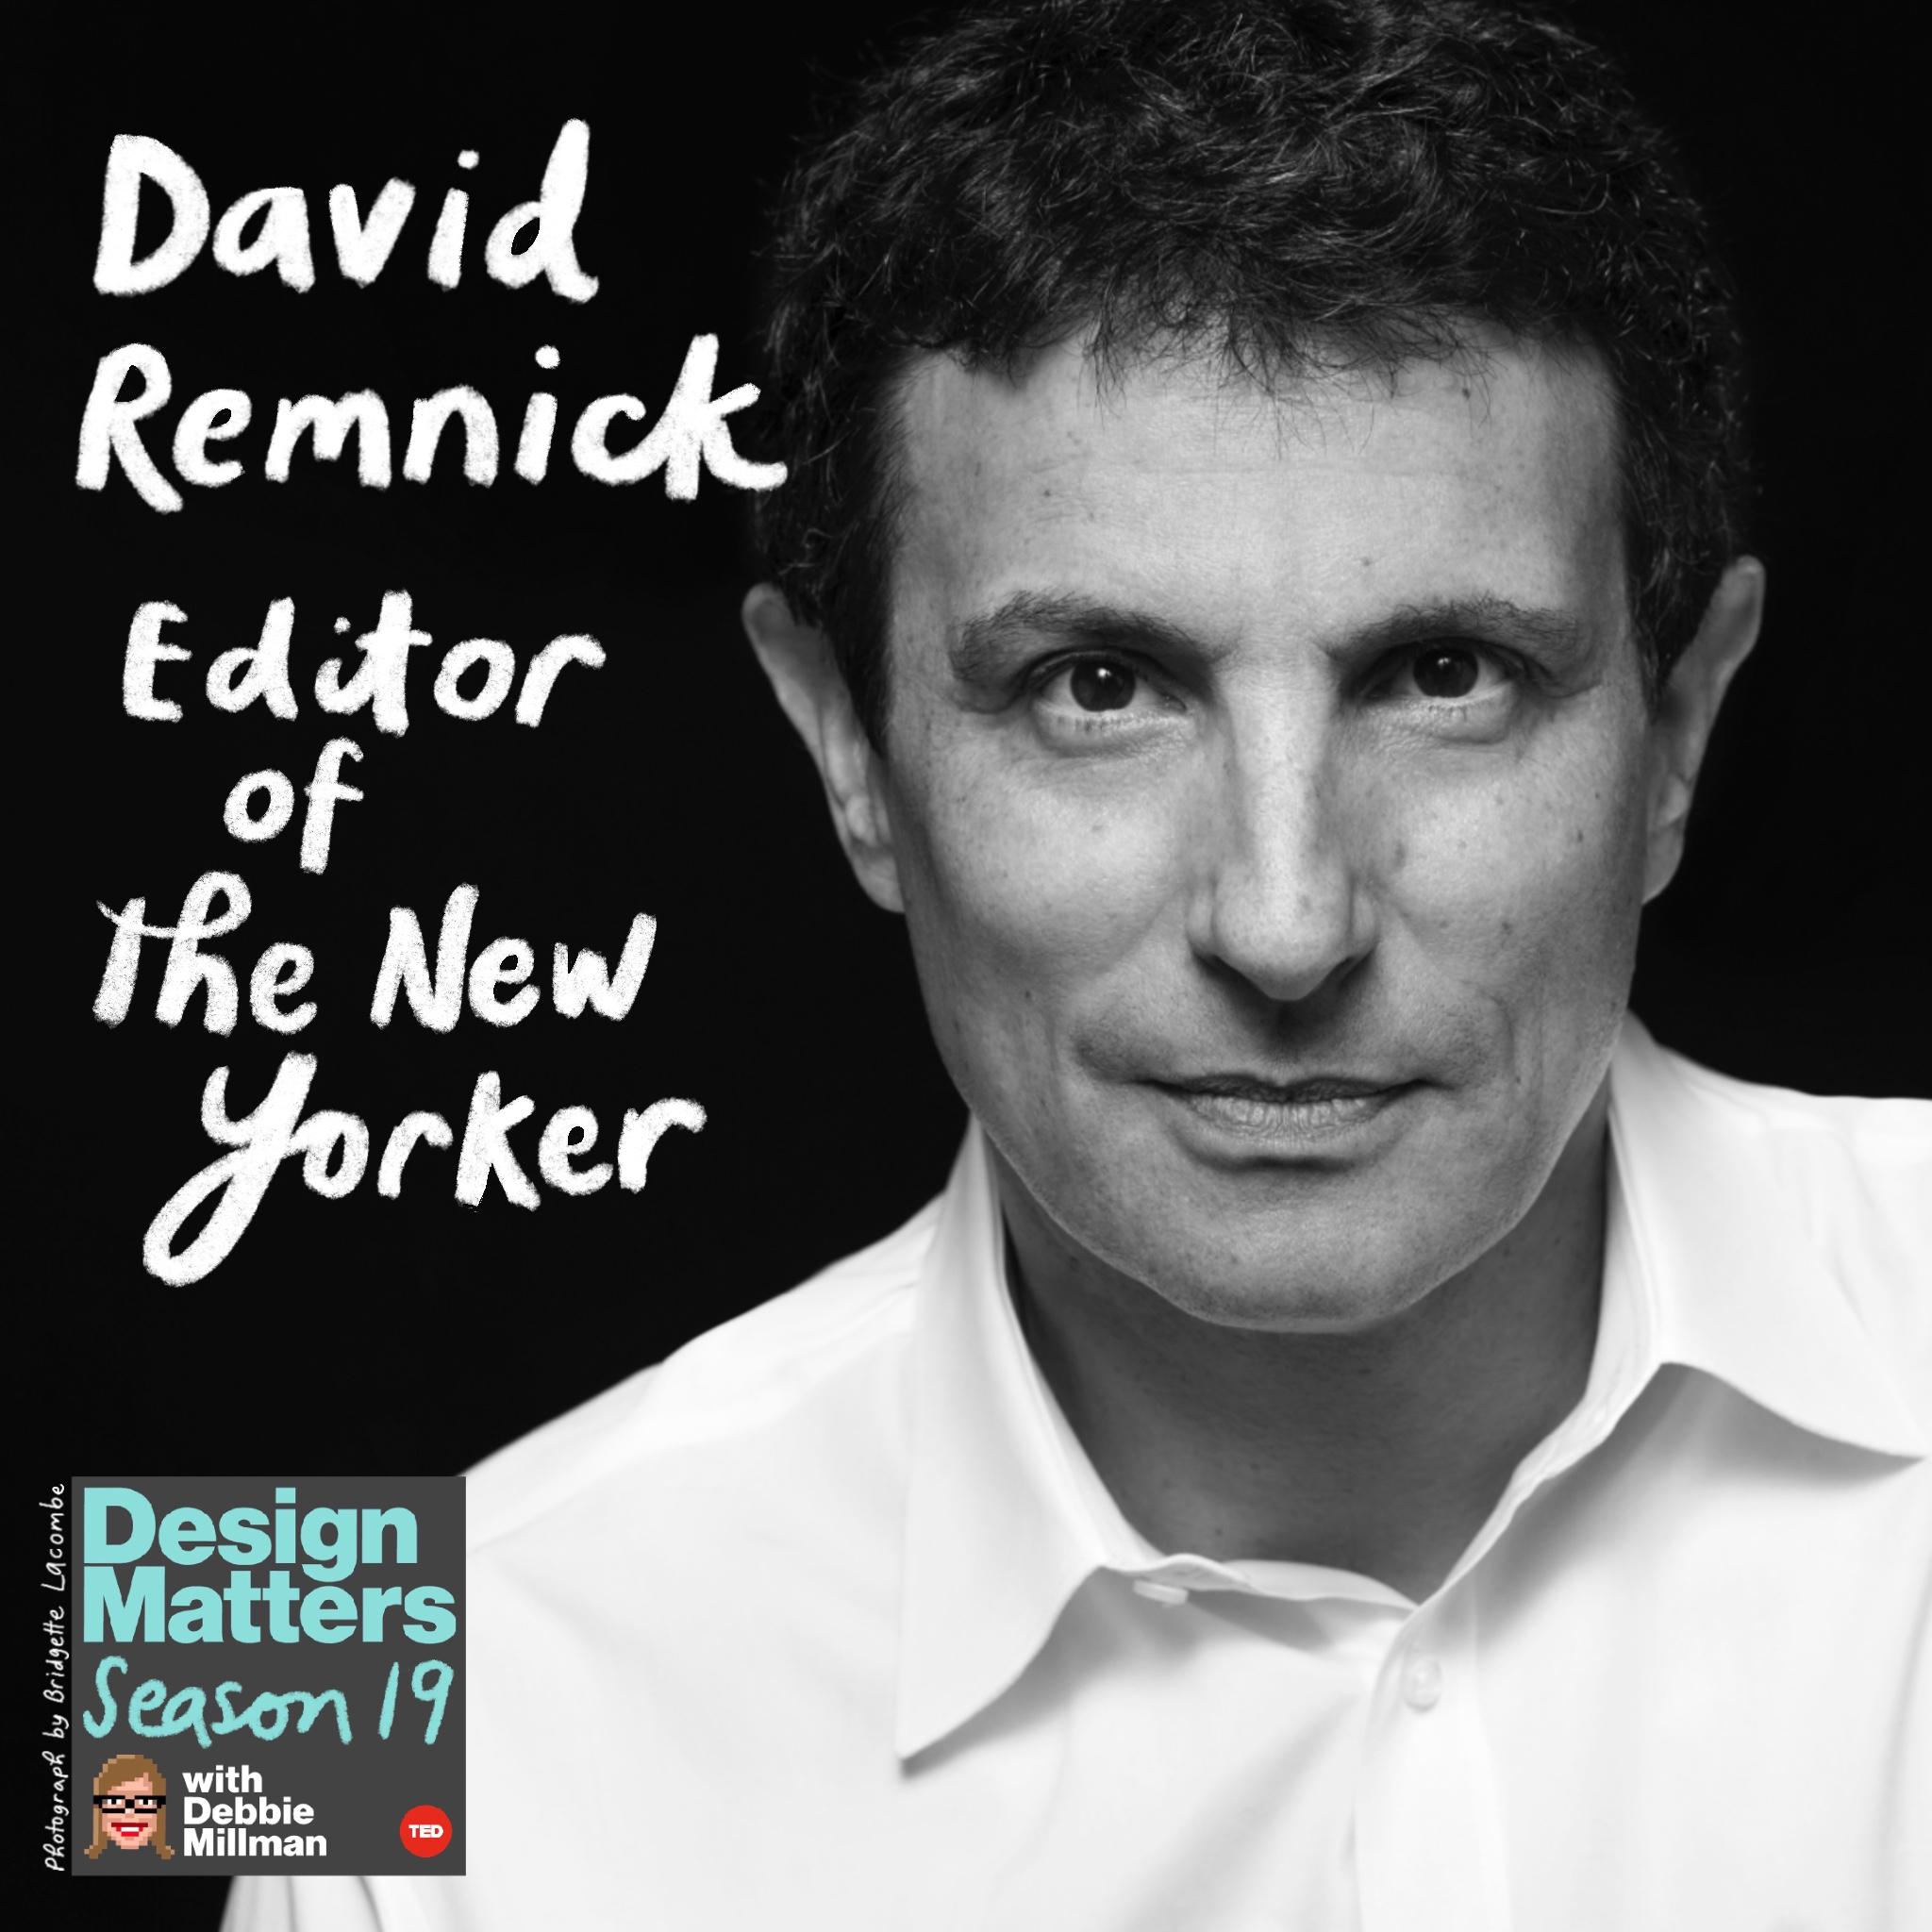 Thumbnail for "David Remnick".